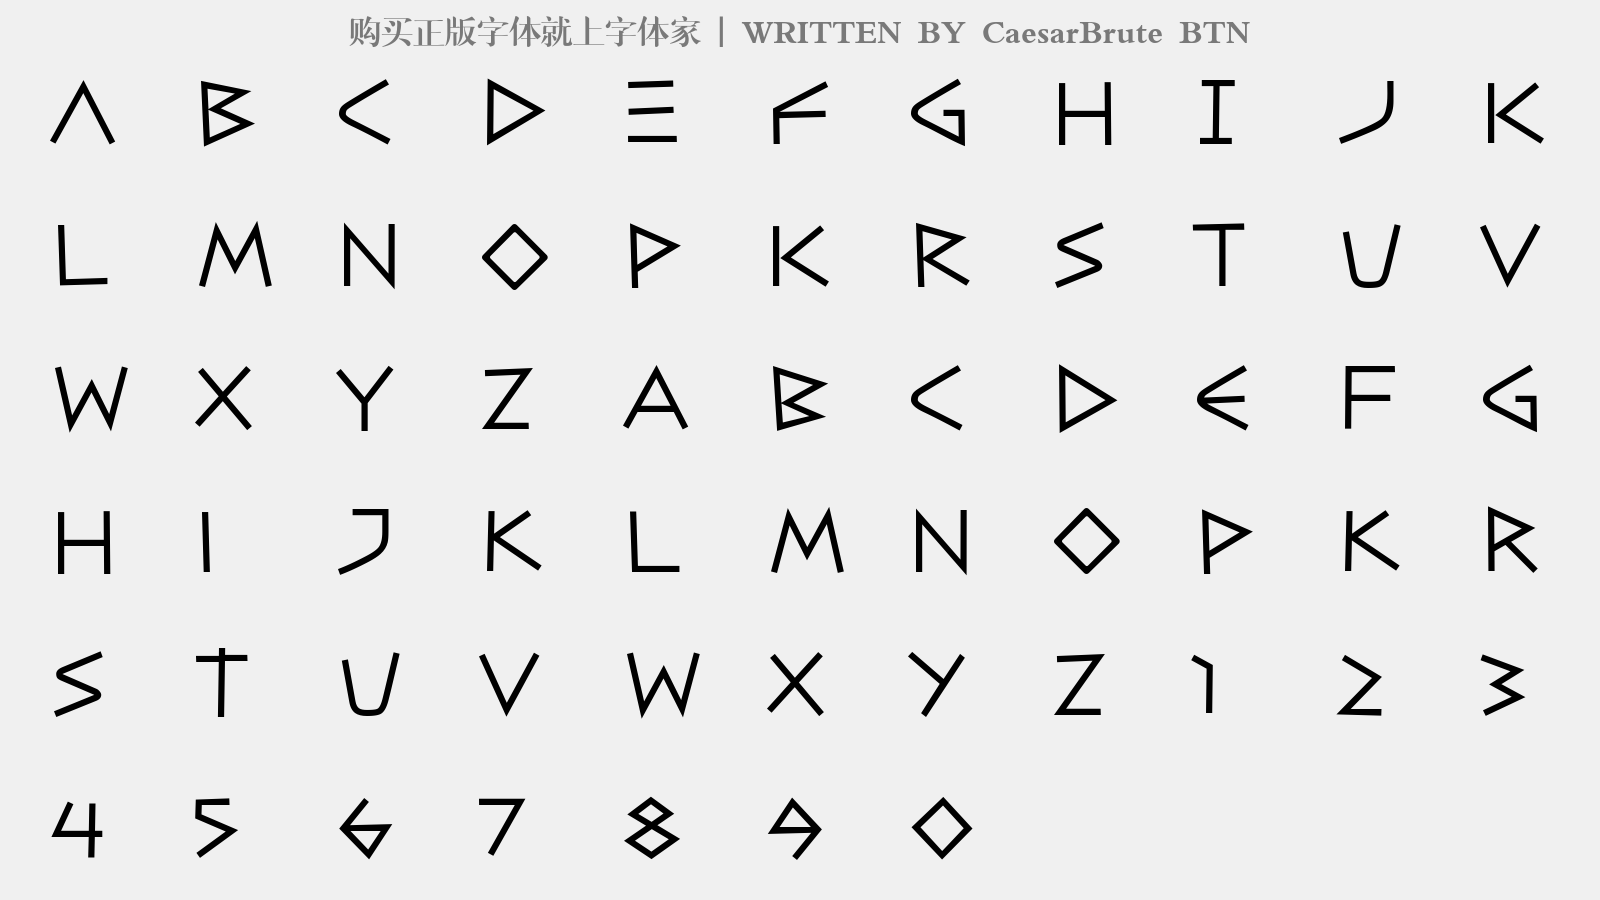 CaesarBrute BTN - 大写字母/小写字母/数字